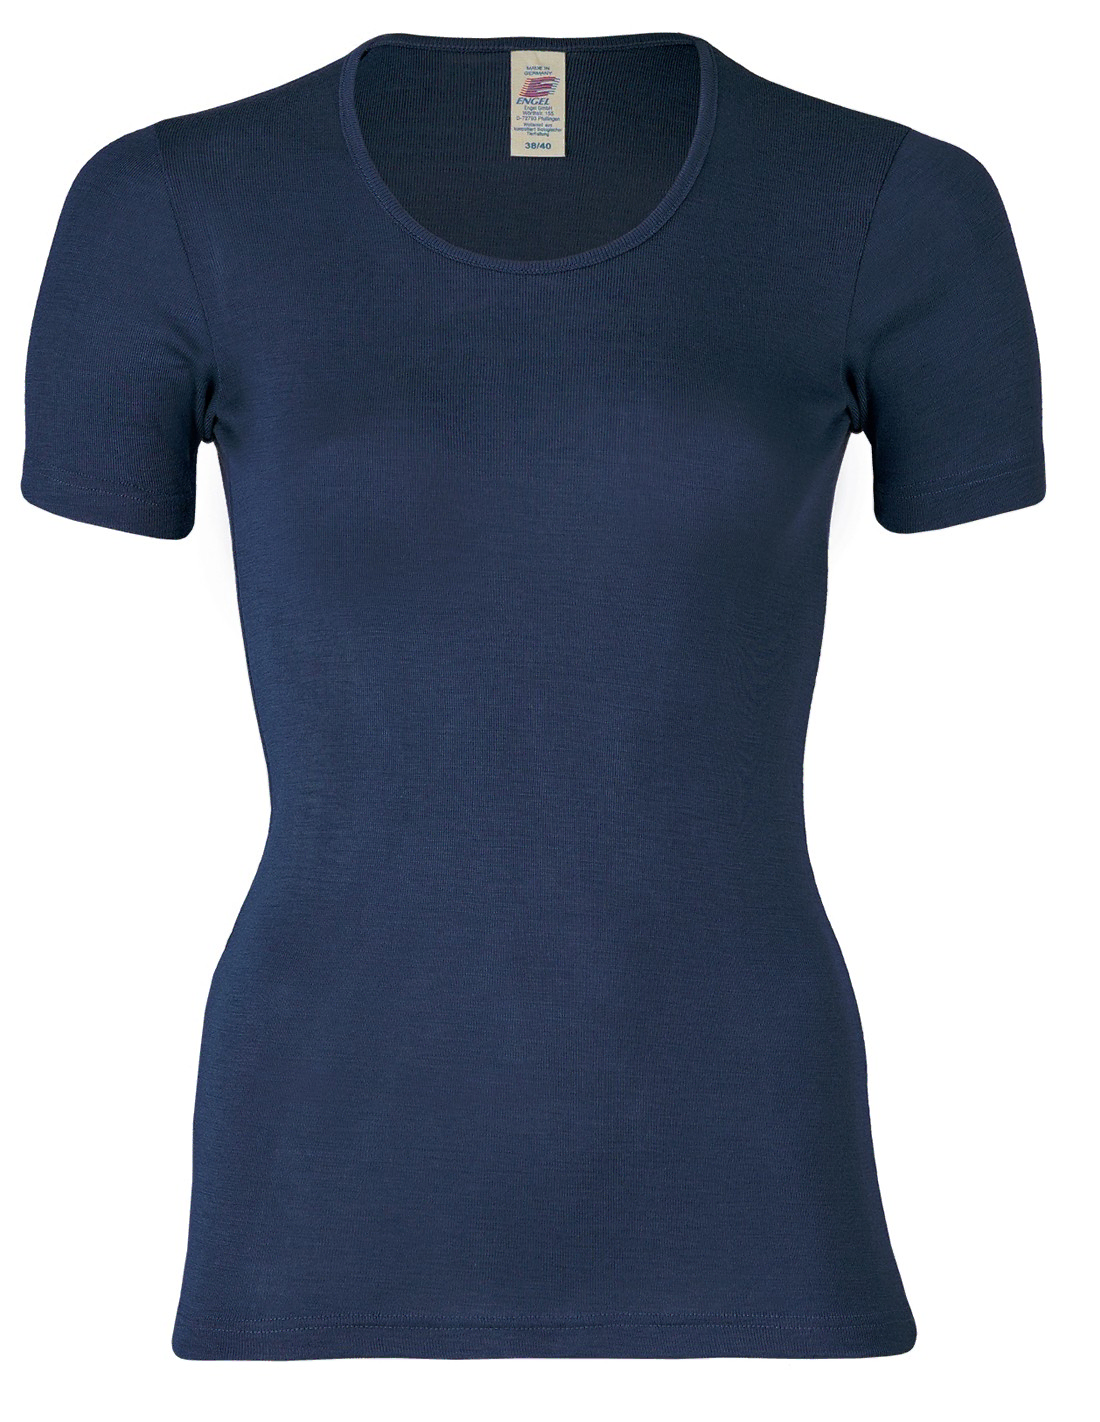 Image of Dames T-Shirt Zijde Wol Engel Natur, Kleur Navy blauw, Maat 34/36 - Small